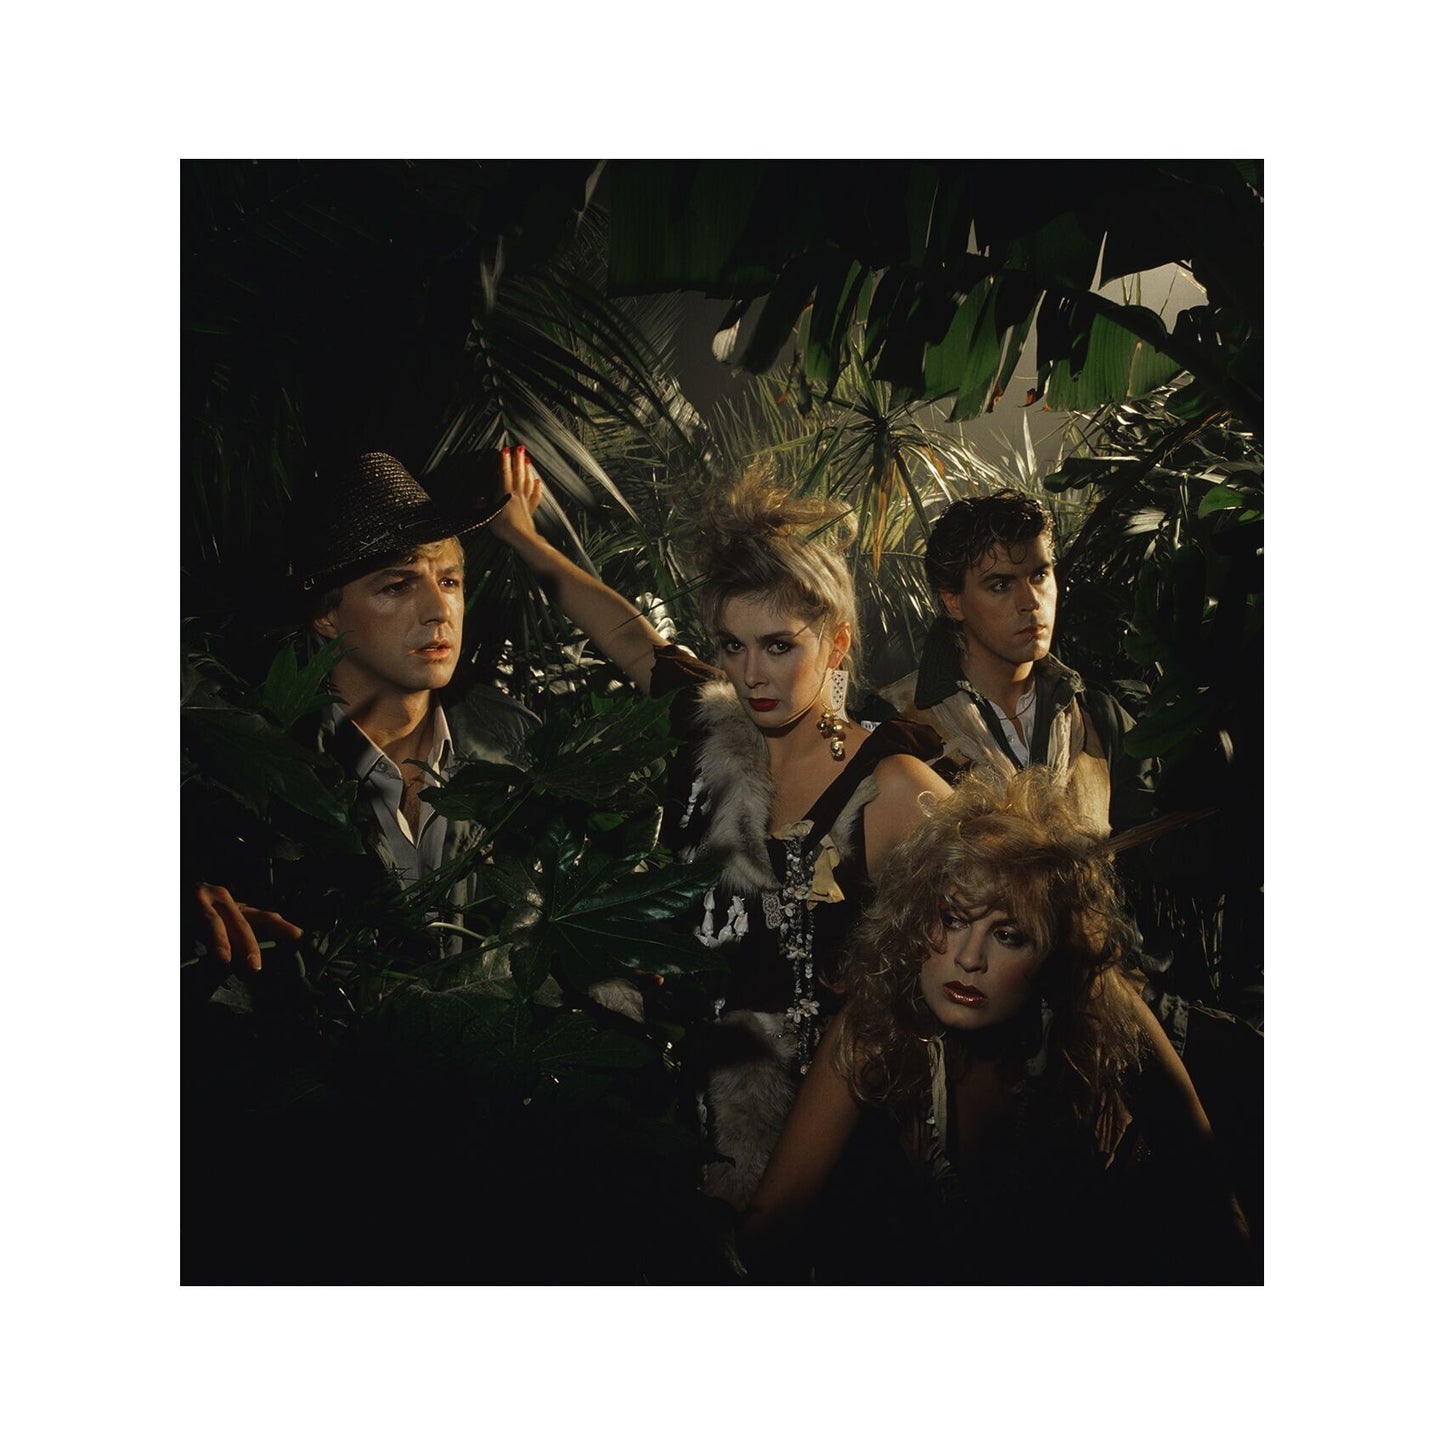 Bucks Fizz - Band as Jungle Explorers - Studio Photoshoot, Print